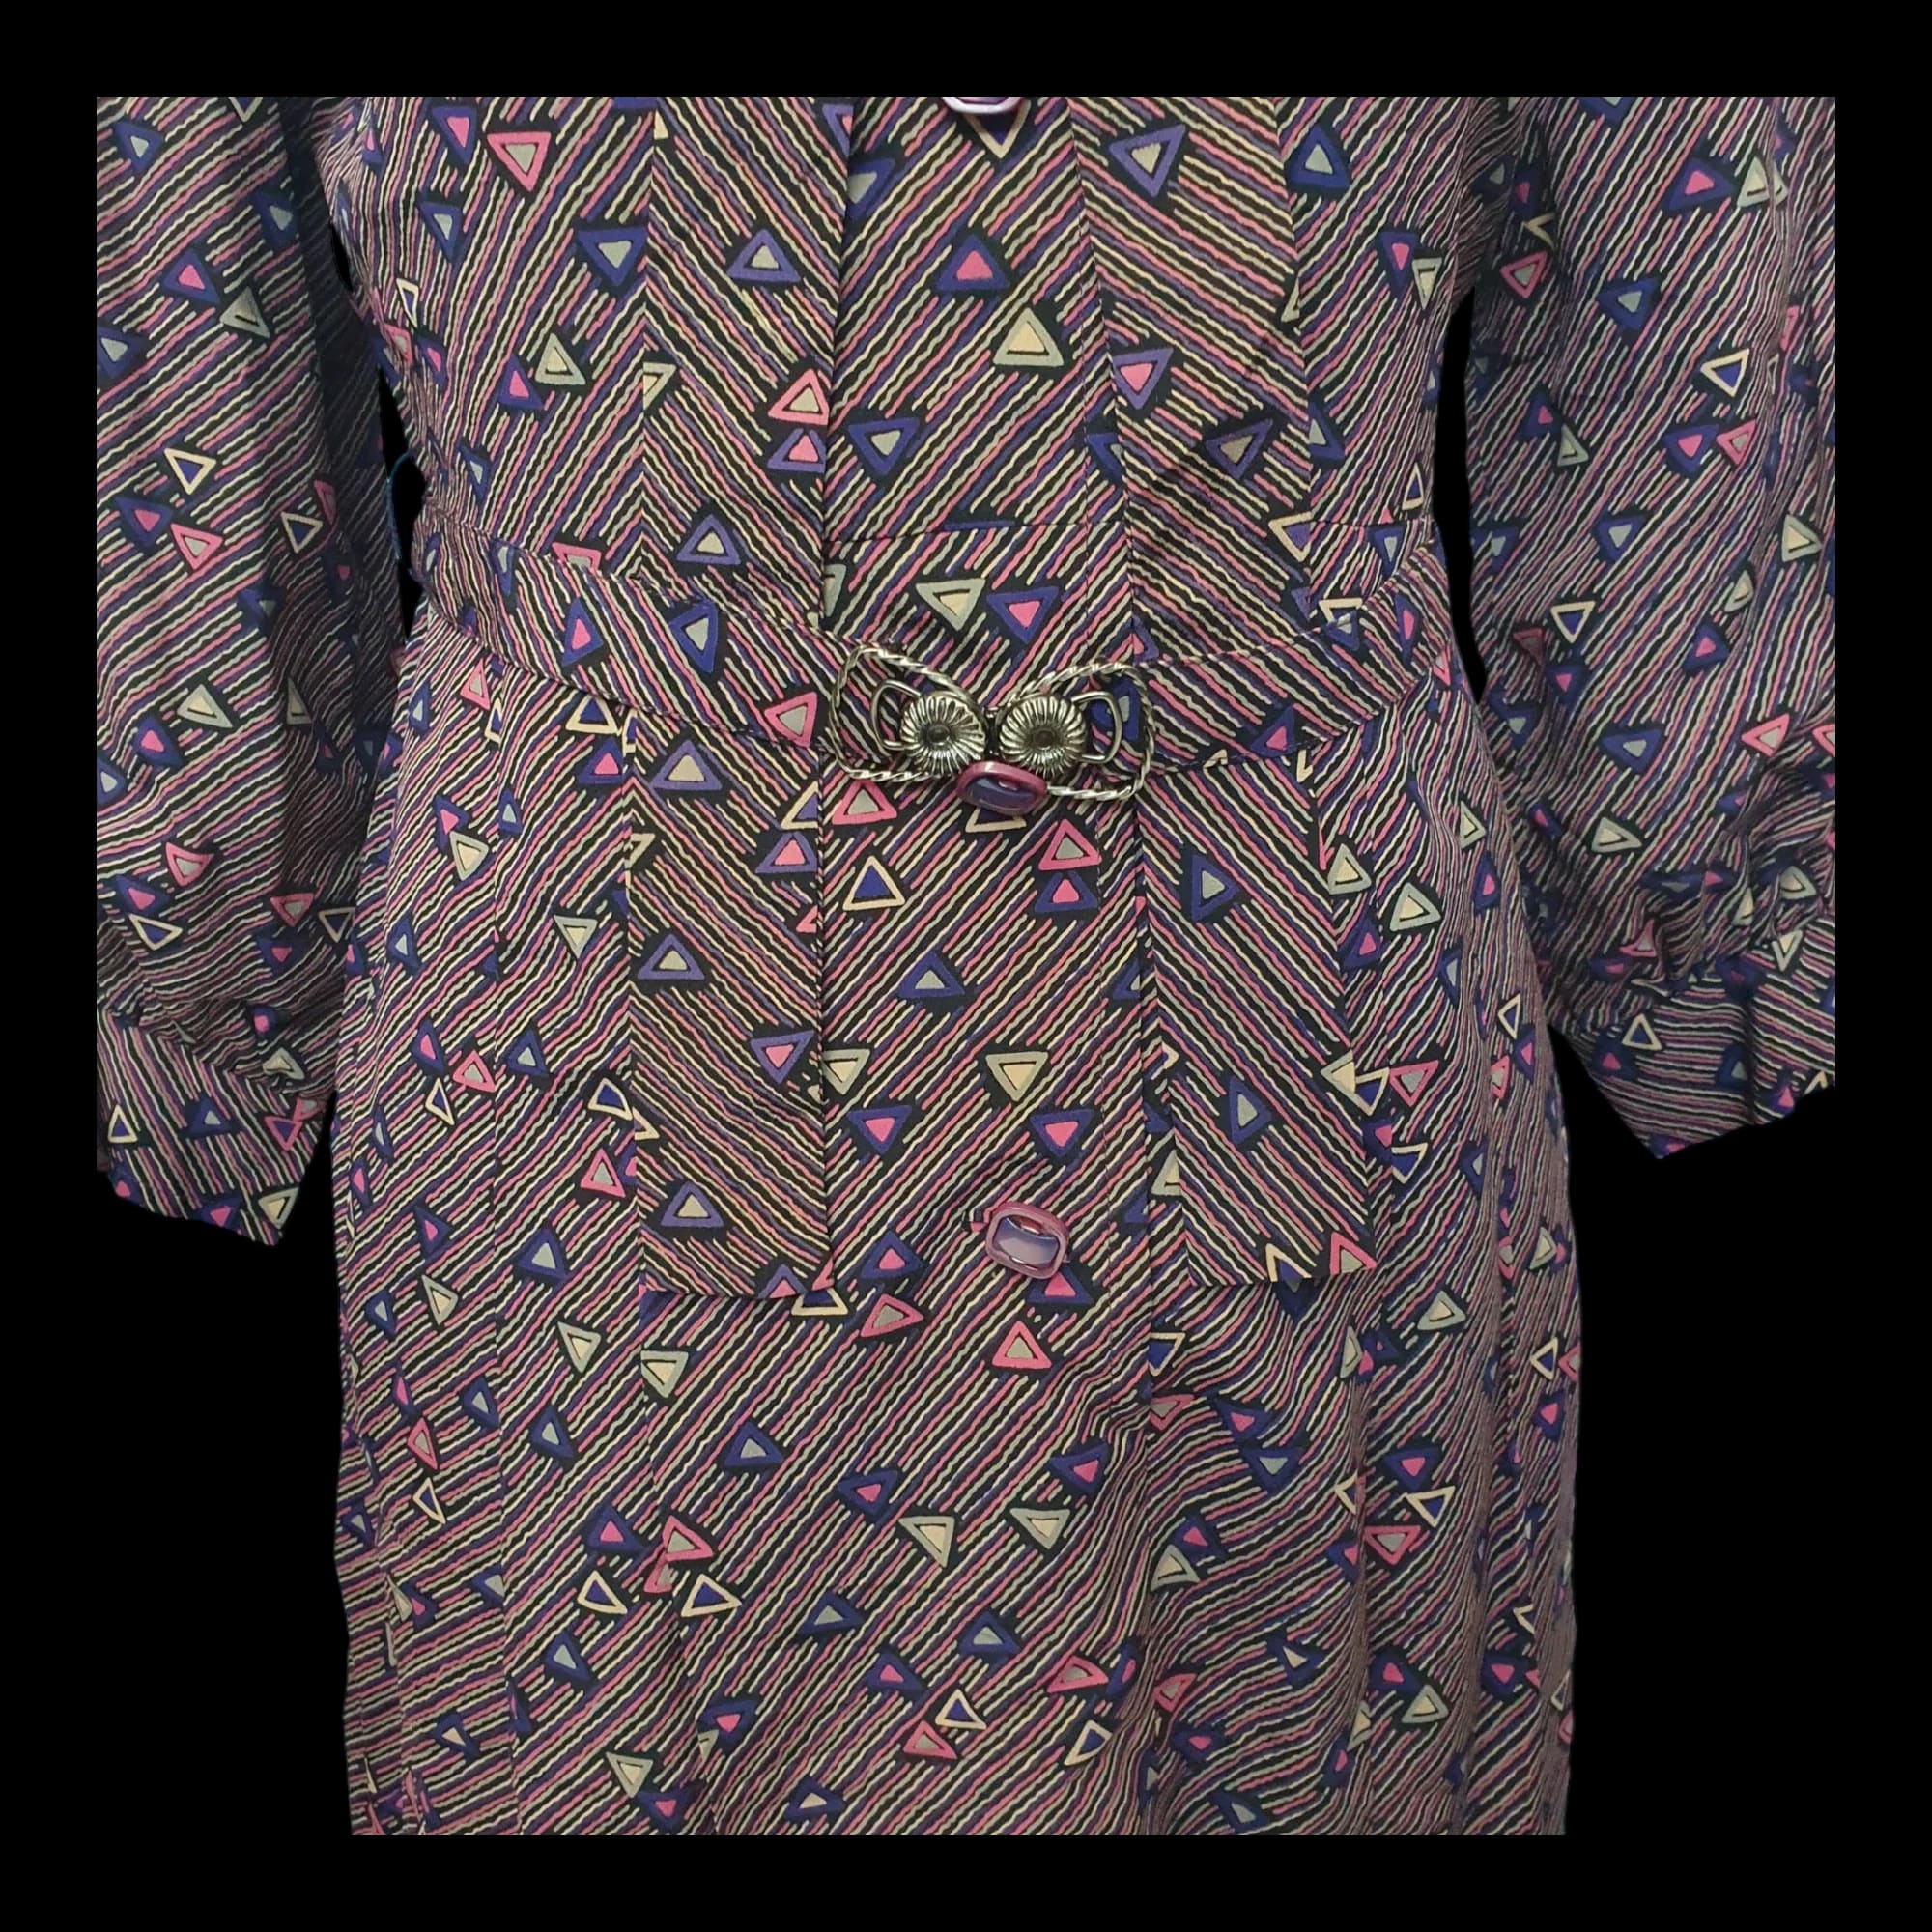 Vintage Dress Purple Triangle Pattern Small Includes Belt